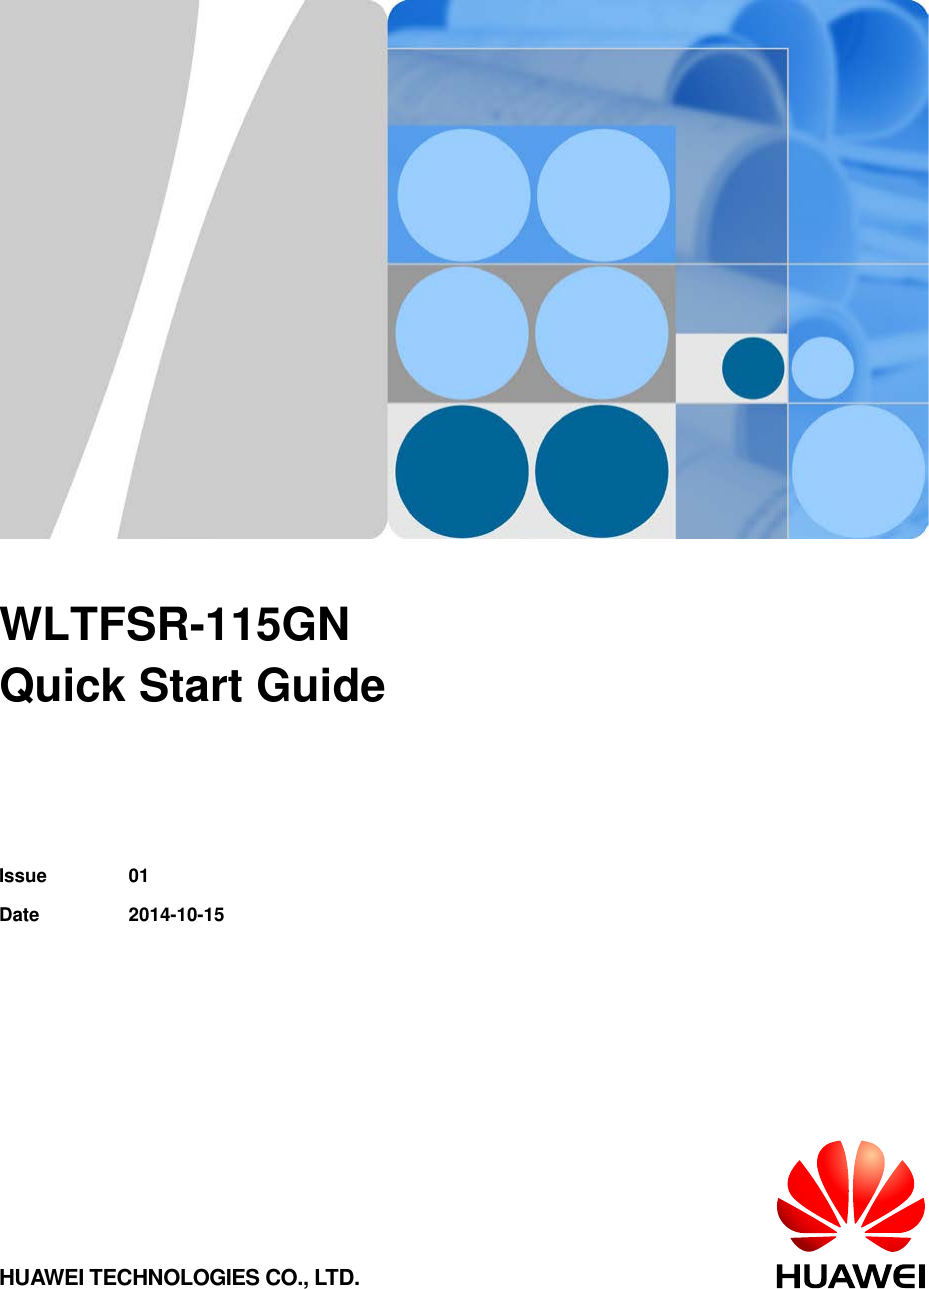         WLTFSR-115GN   Quick Start Guide   Issue 01 Date 2014-10-15 HUAWEI TECHNOLOGIES CO., LTD. 